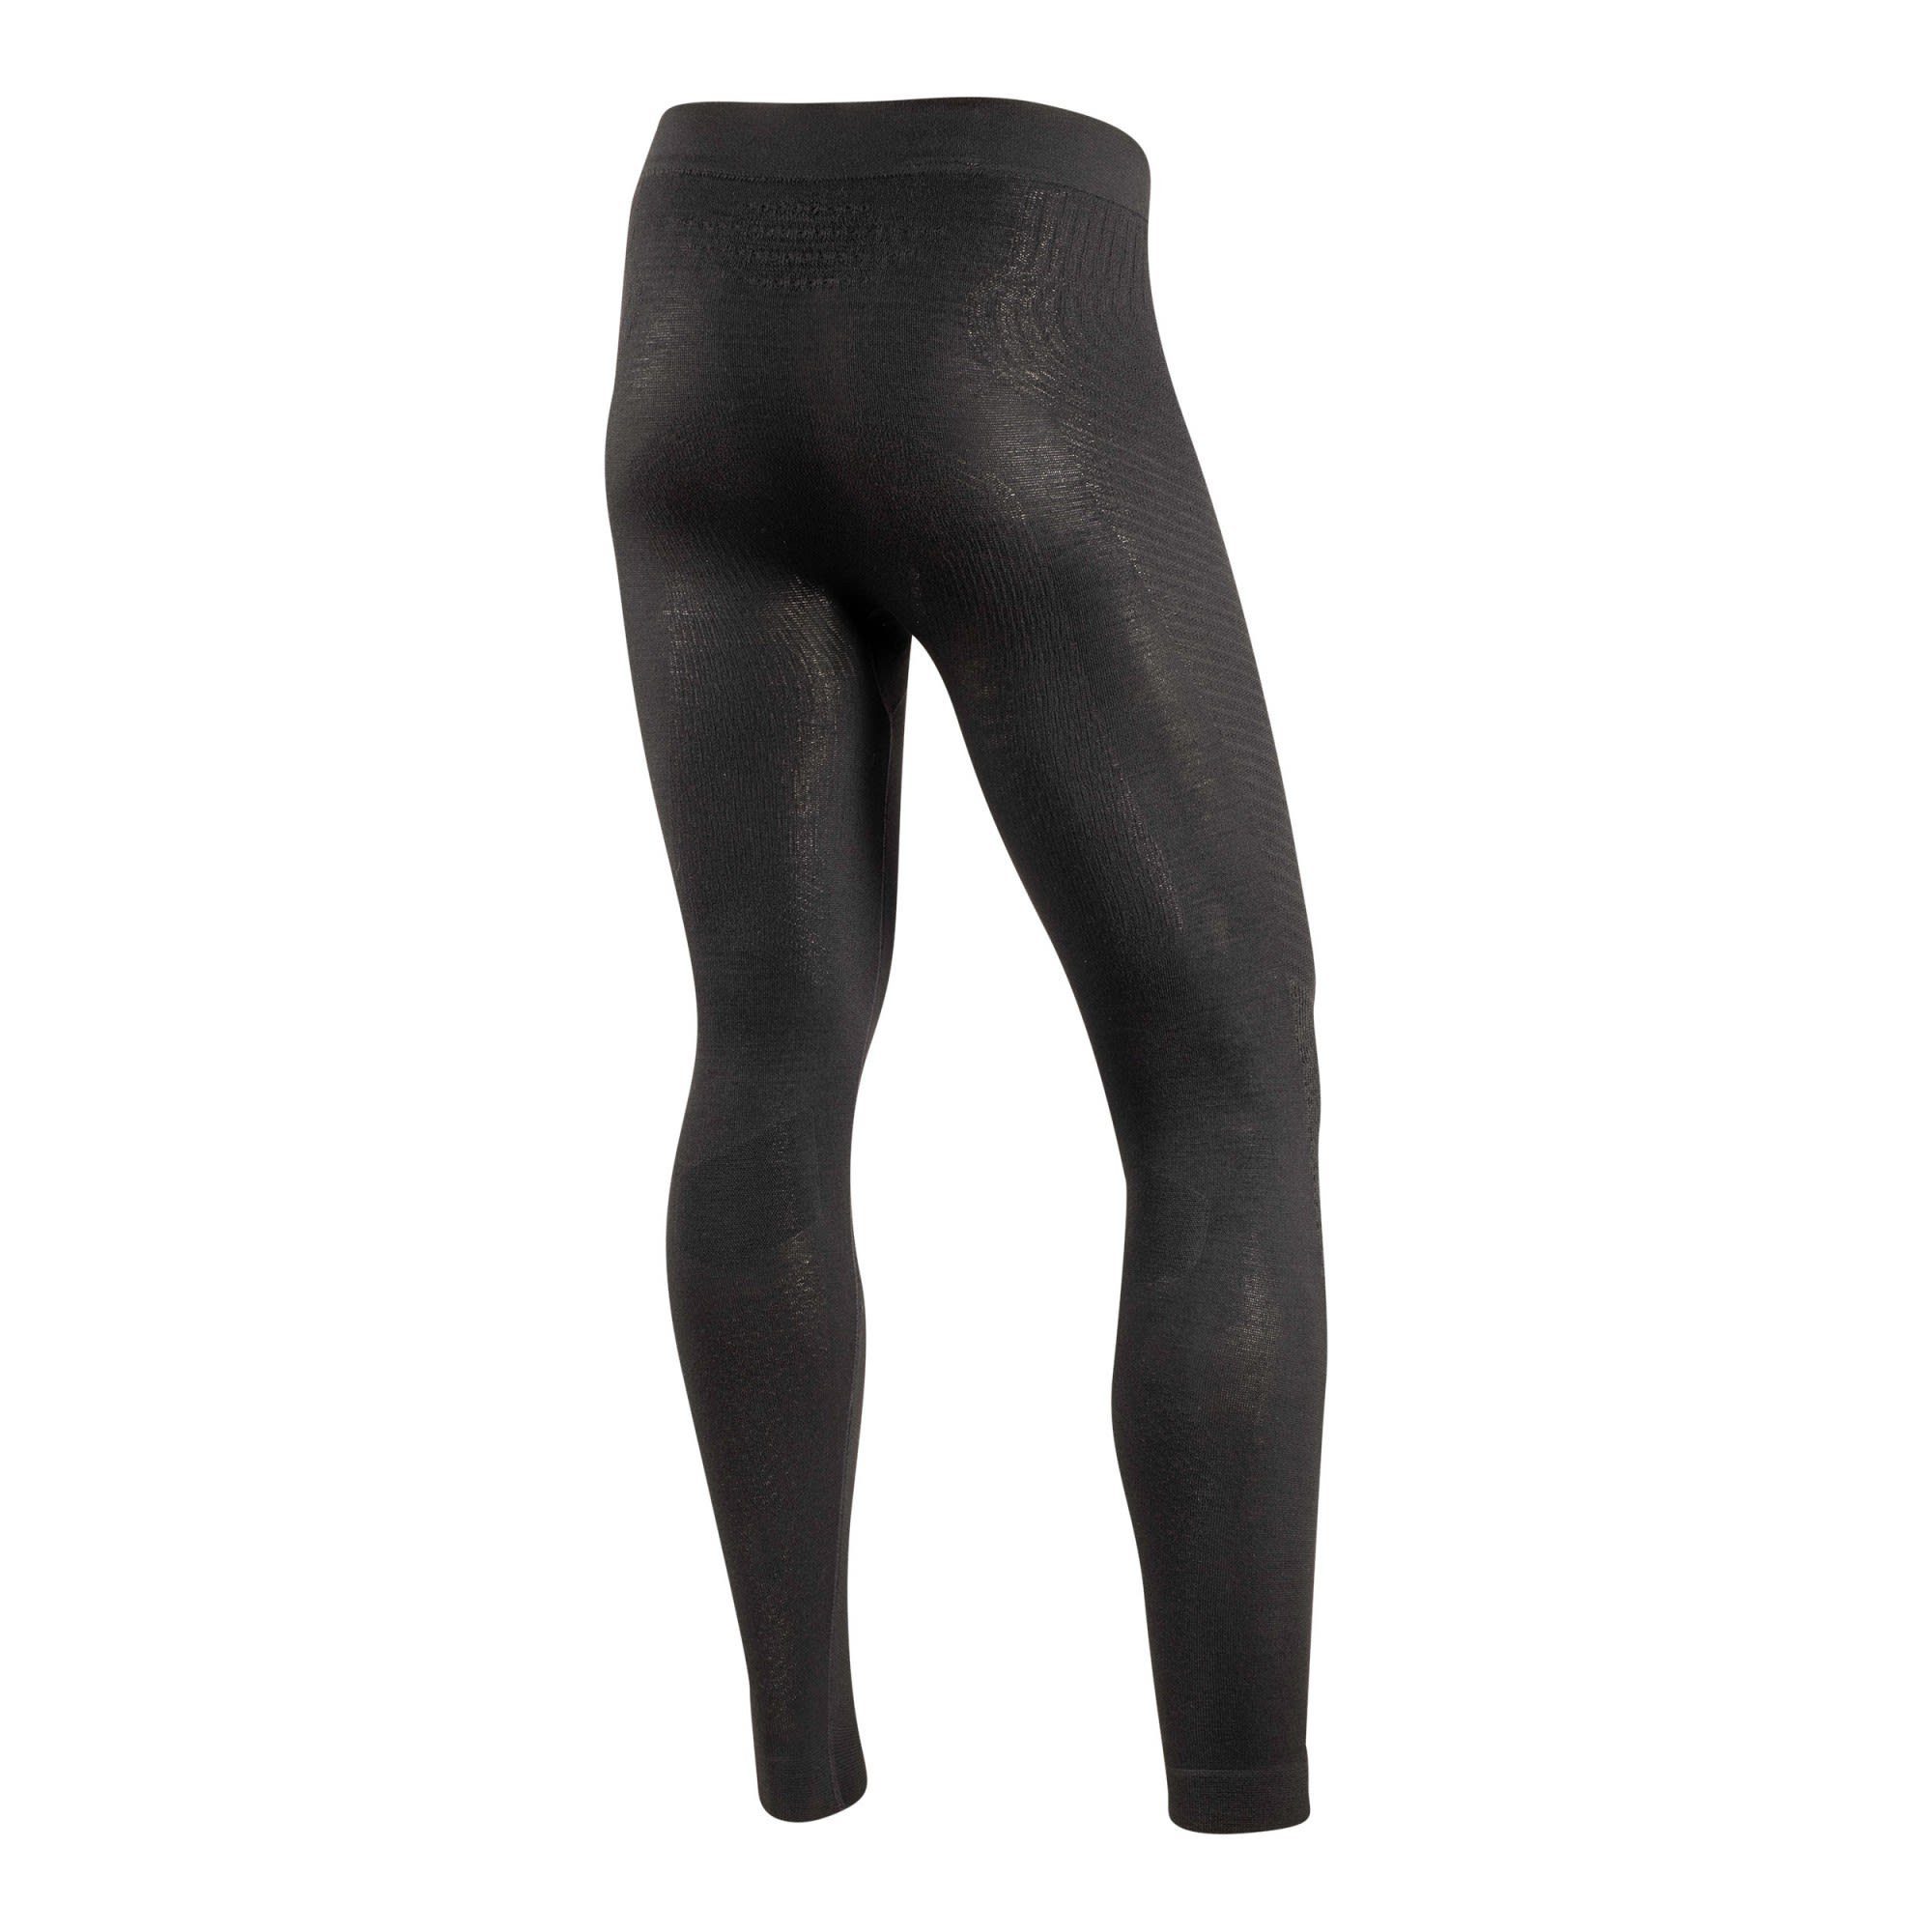 Black M UYN Herren Uw Long Uyn Fusyon - Leggings Tight Black Cashmere Pants